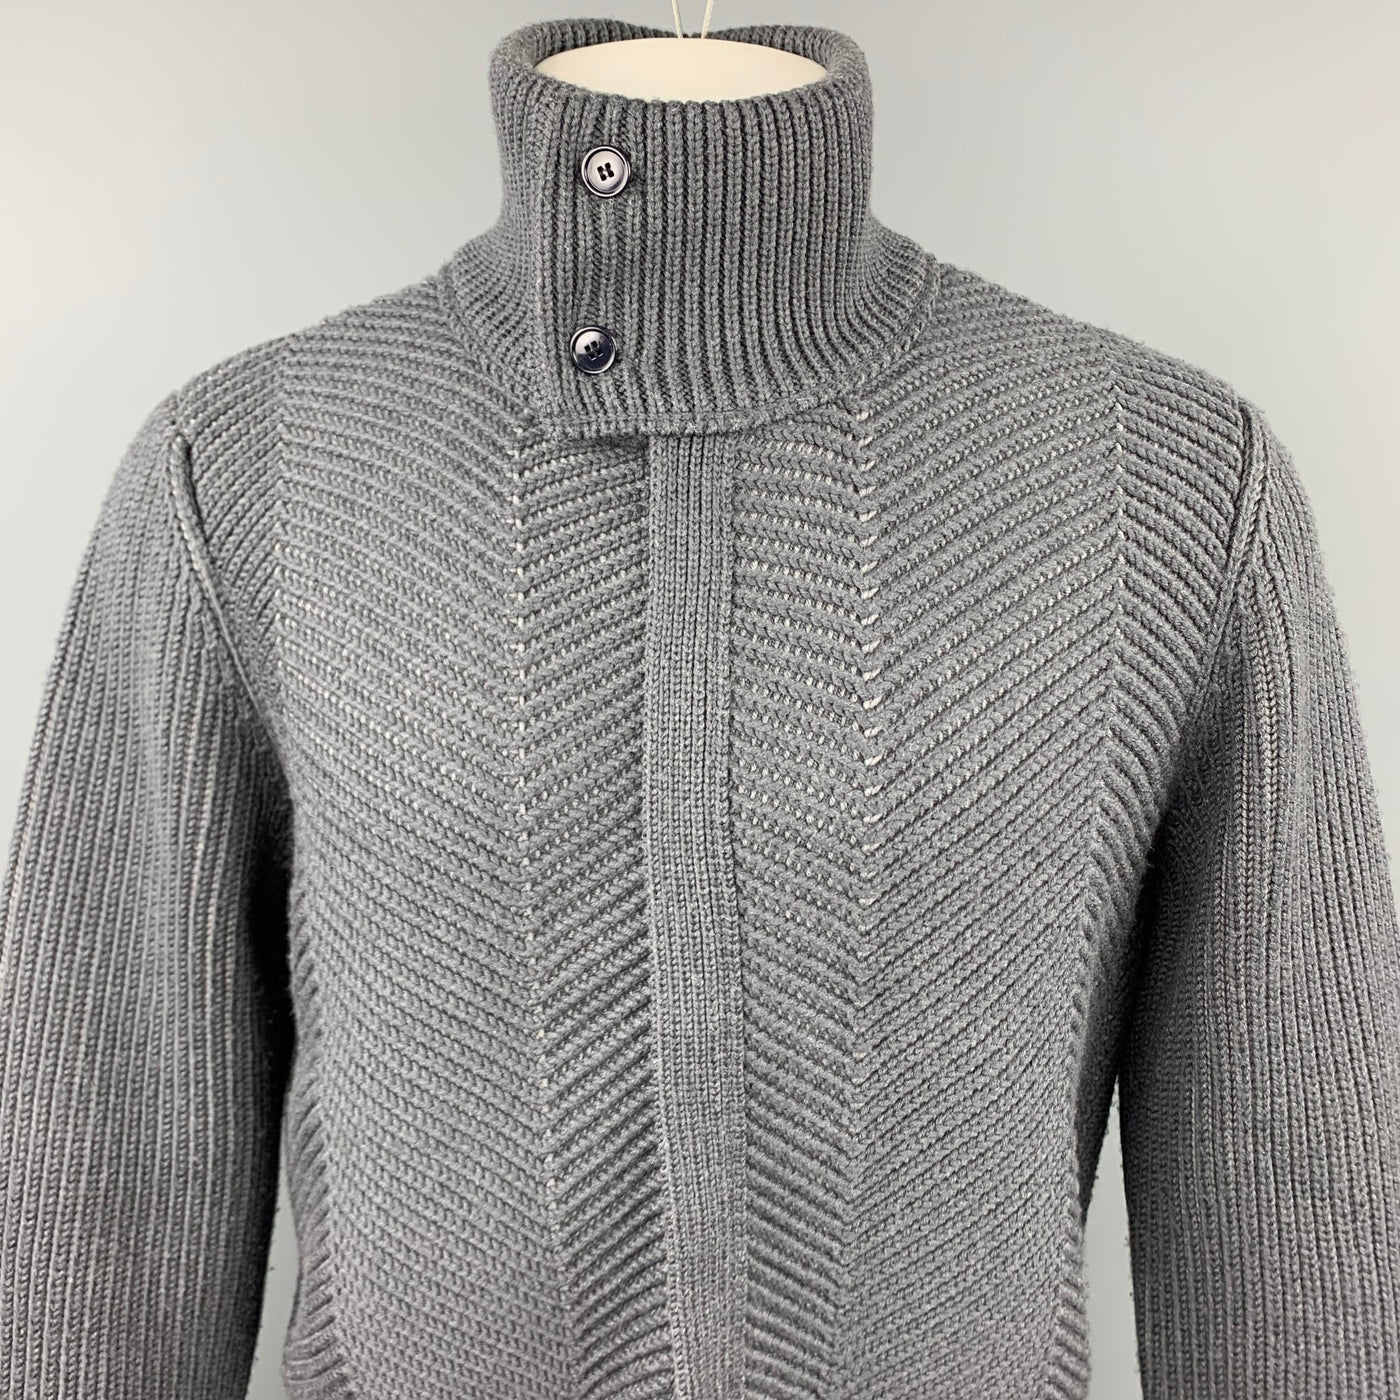 LOUIS VUITTON Size M Gray Knitted Wool Blend Zip Up High Collar Jacket